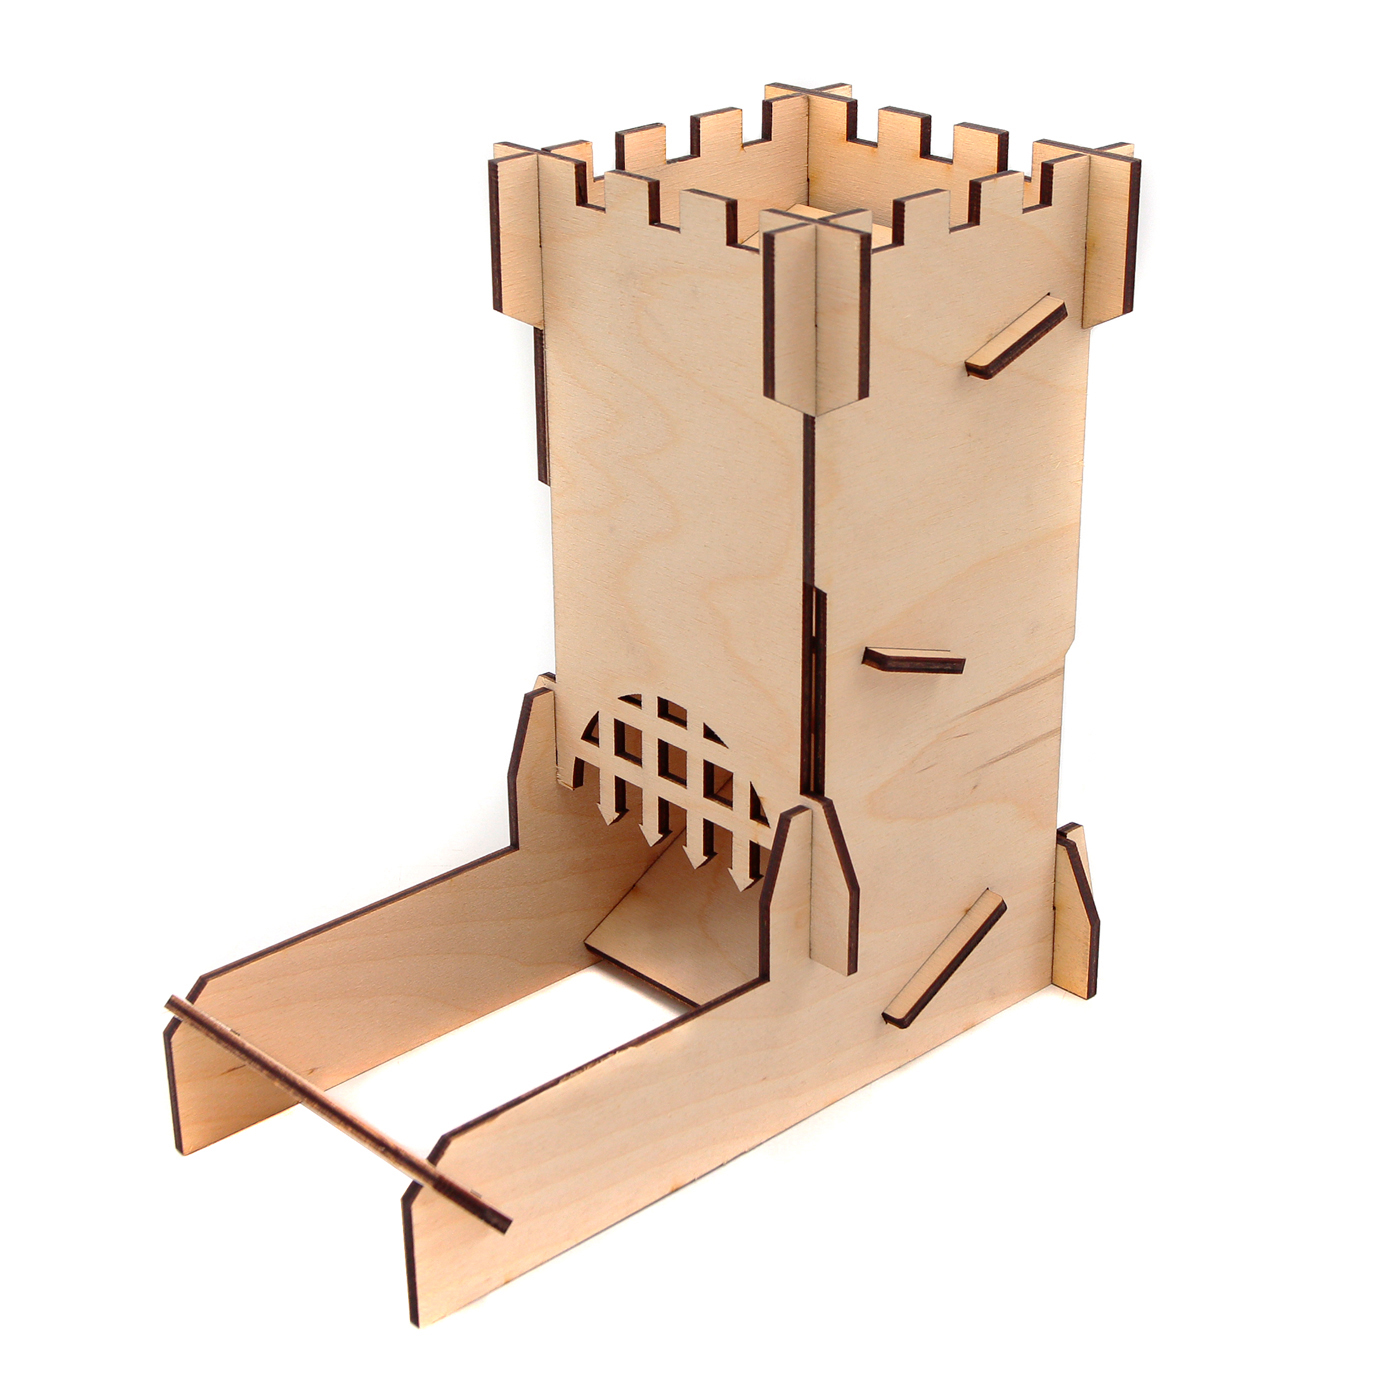 Башня для кубиков Stuff Pro деревянная, для DnD